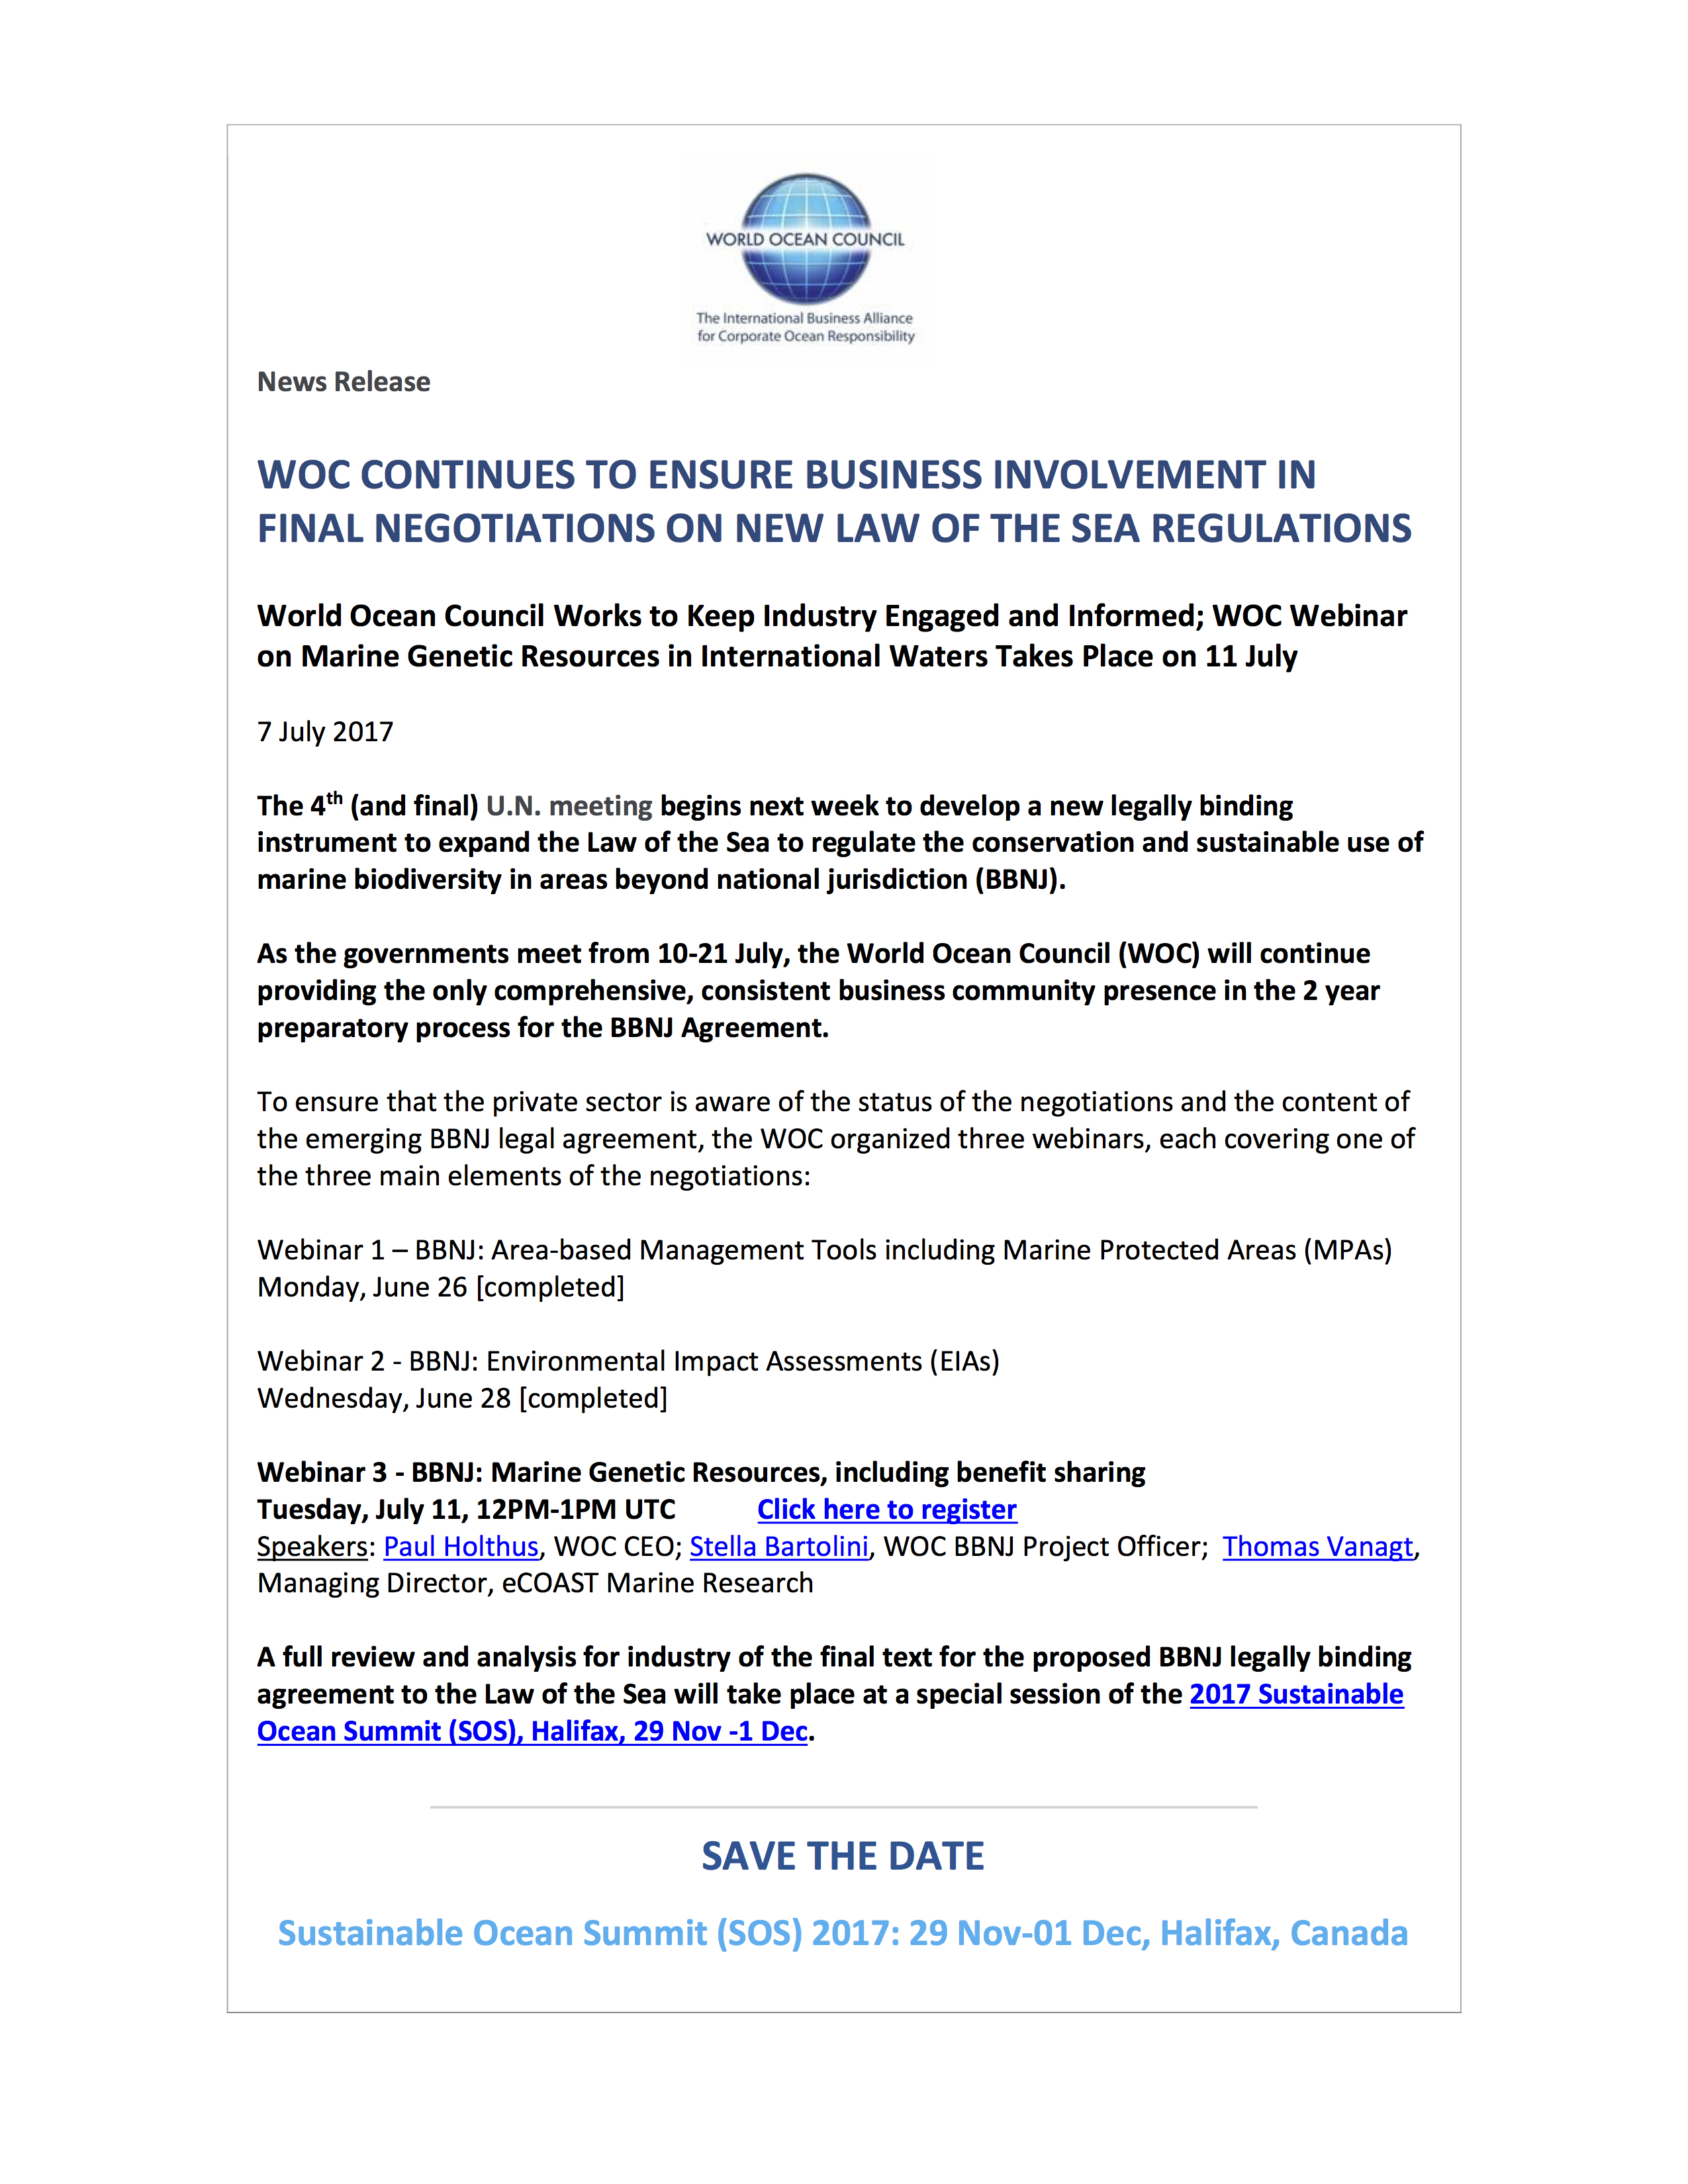 New High Seas Regulations - WOC Webinar on Marine Genetic Resources